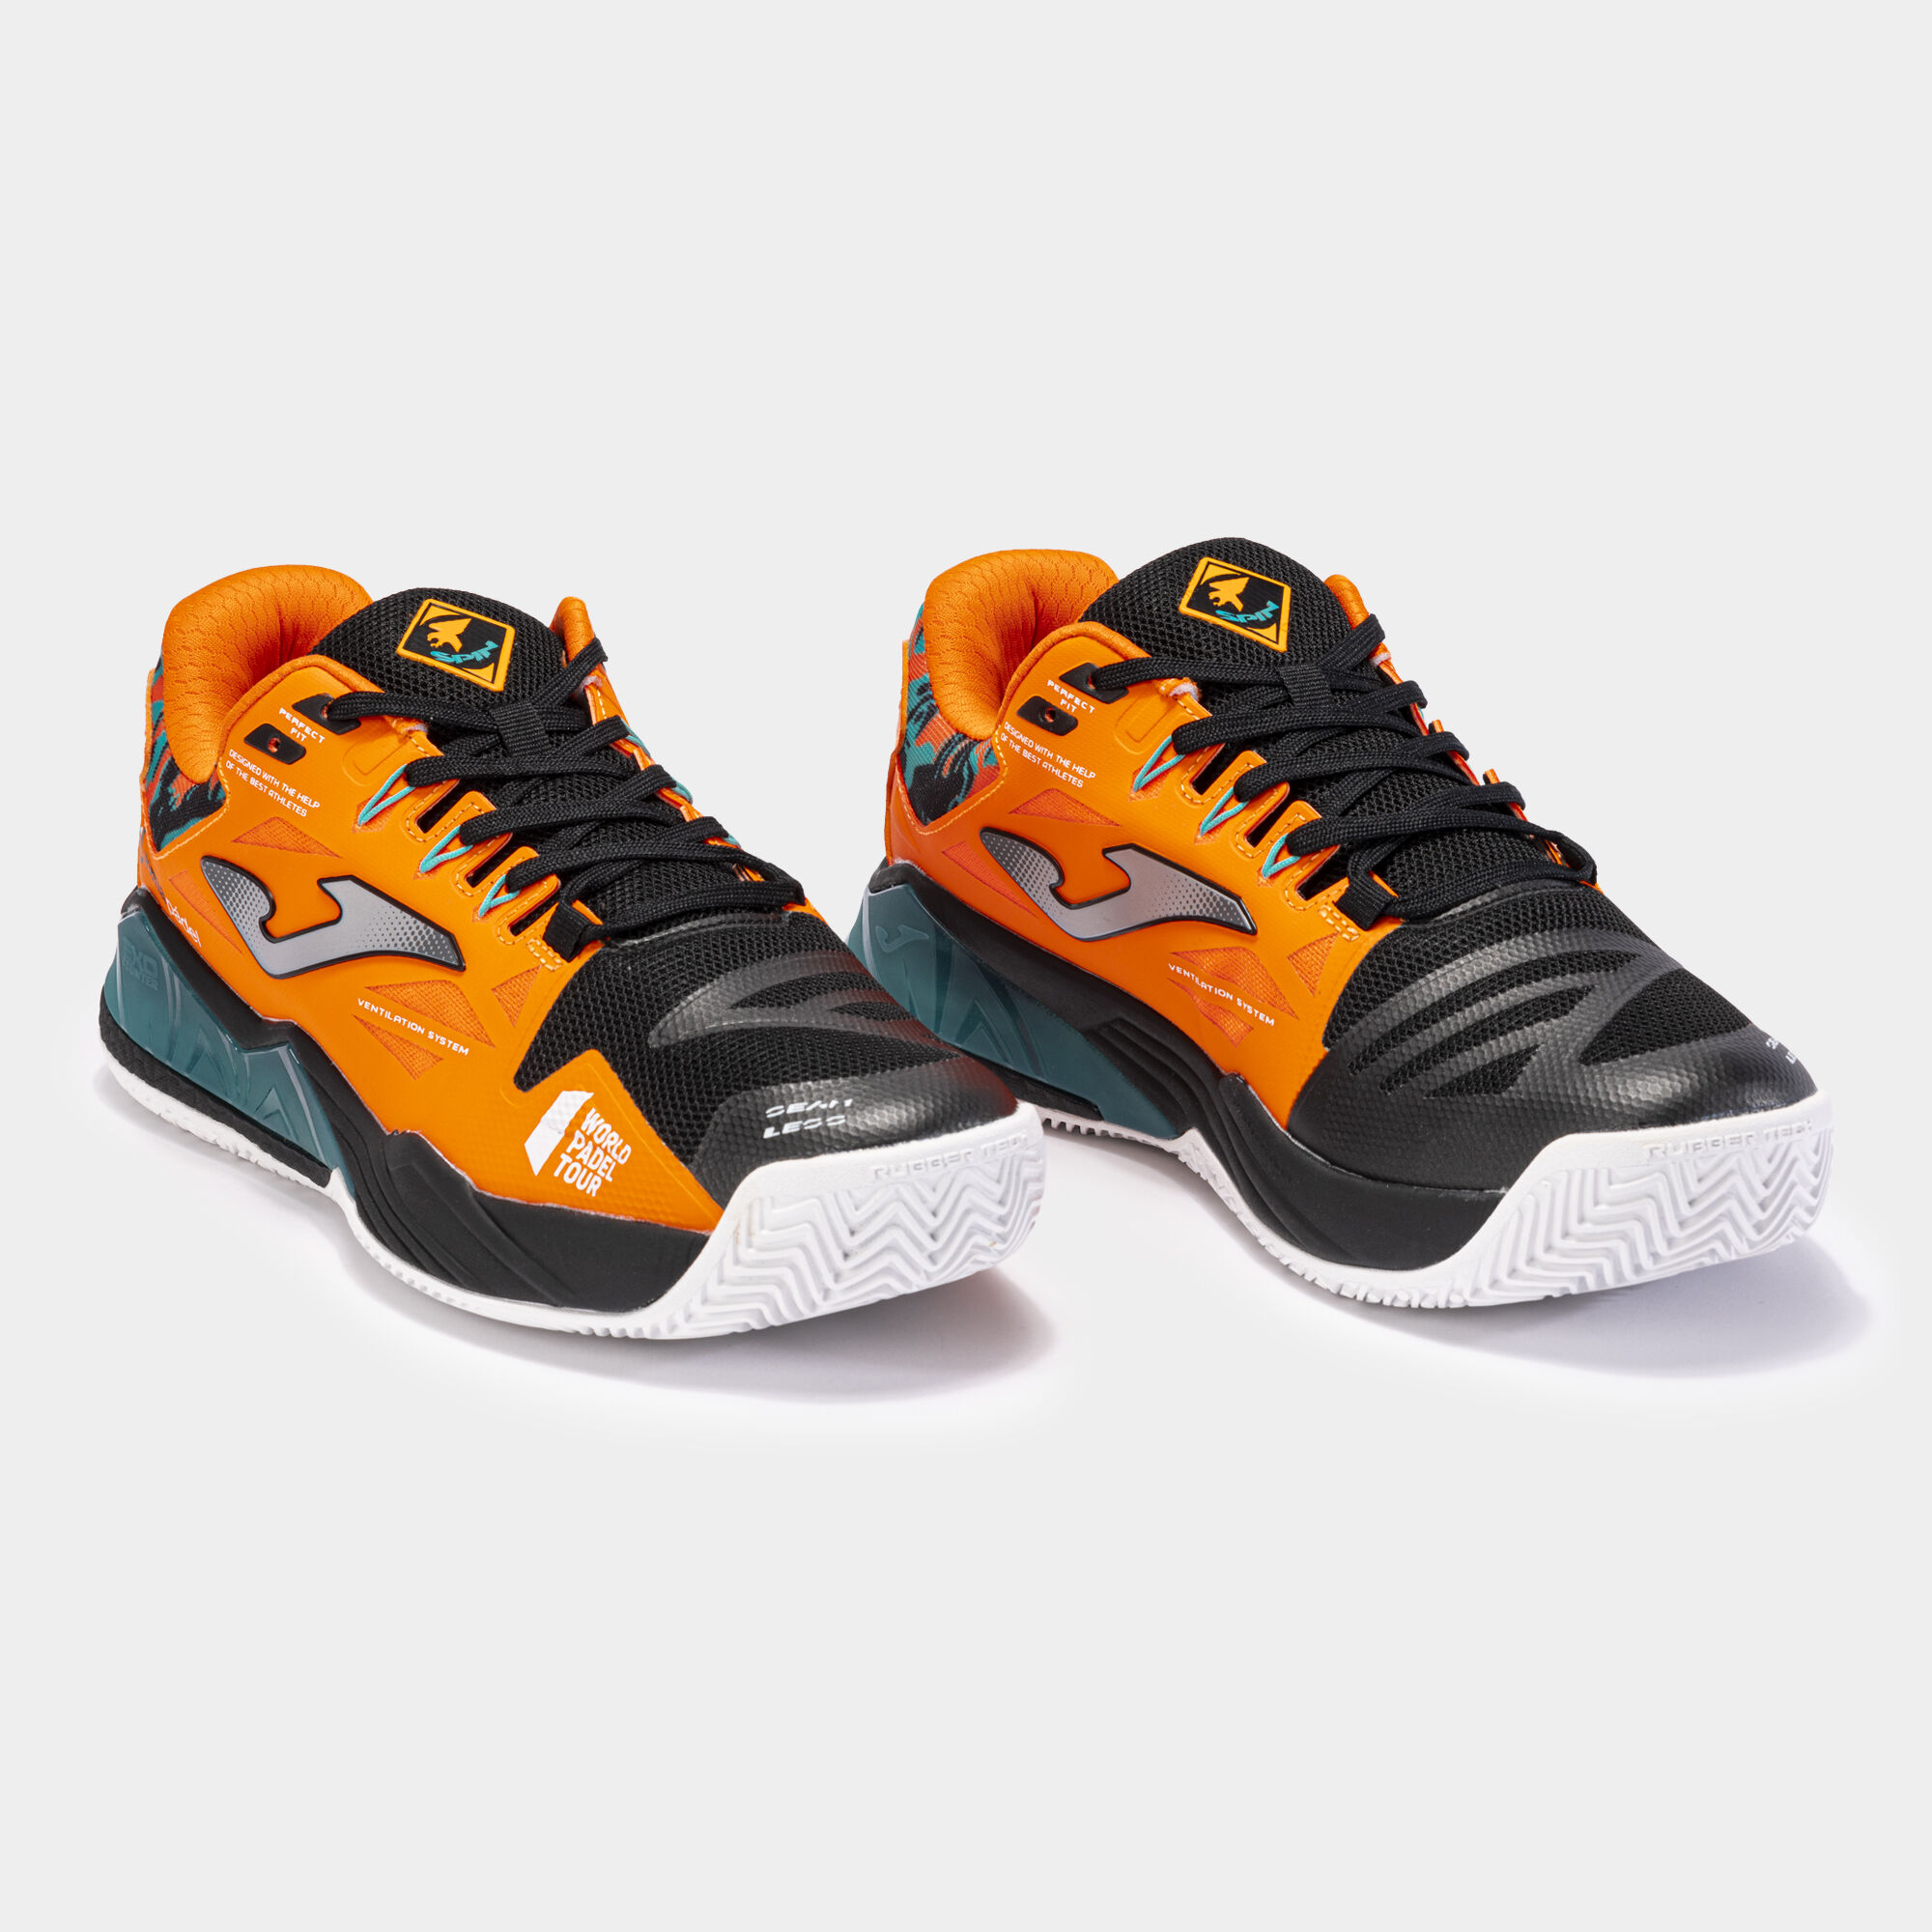 Pantofi sport Spin Men 23 bărbaȚi portocaliu negru